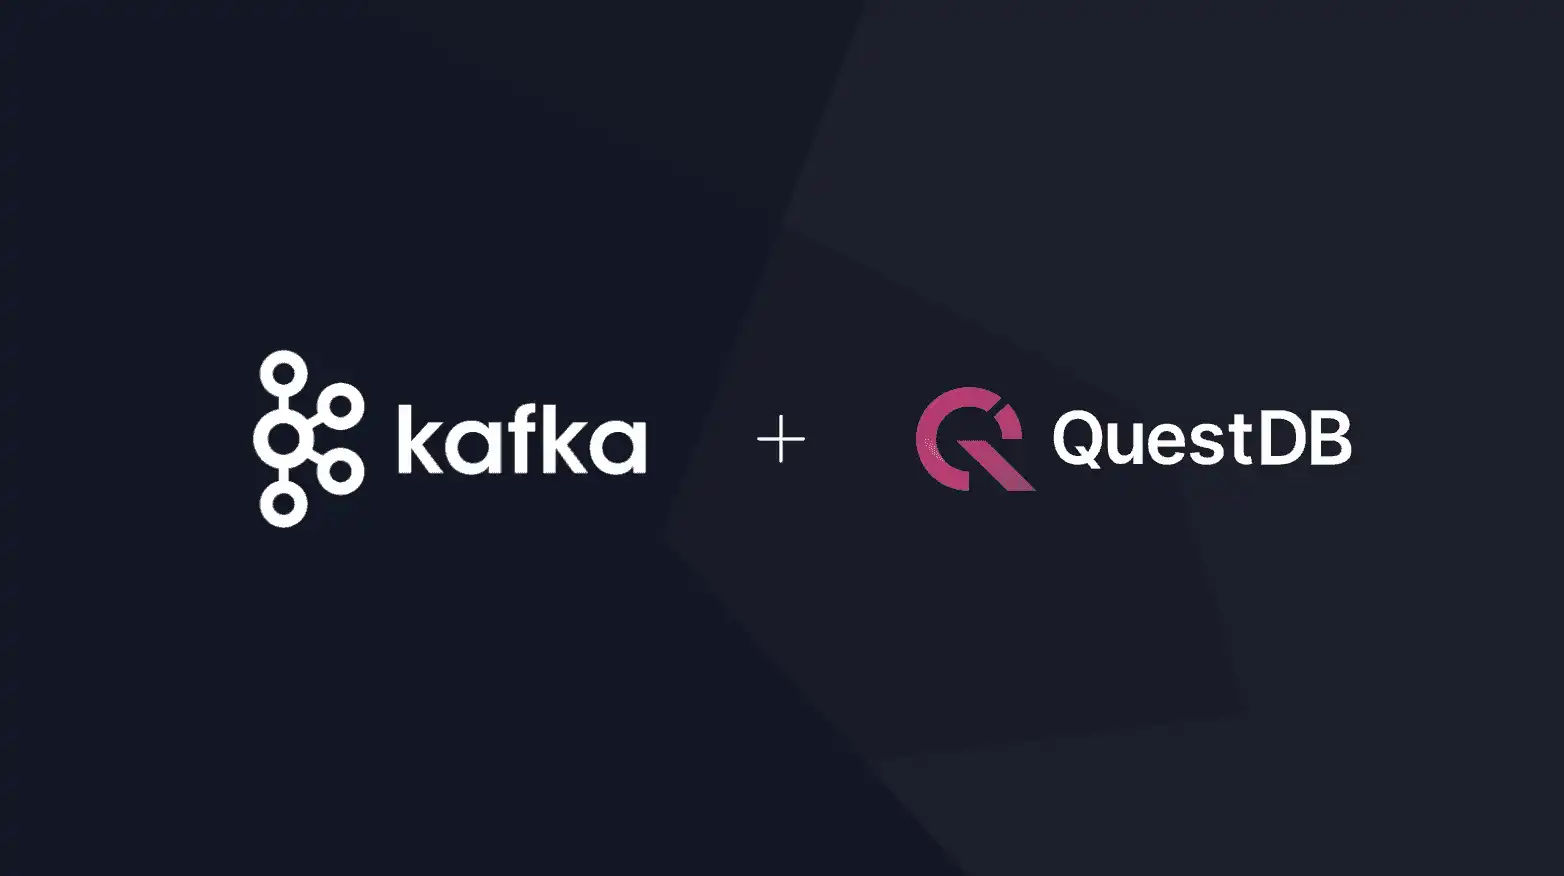 Kafka and QuestDB logos